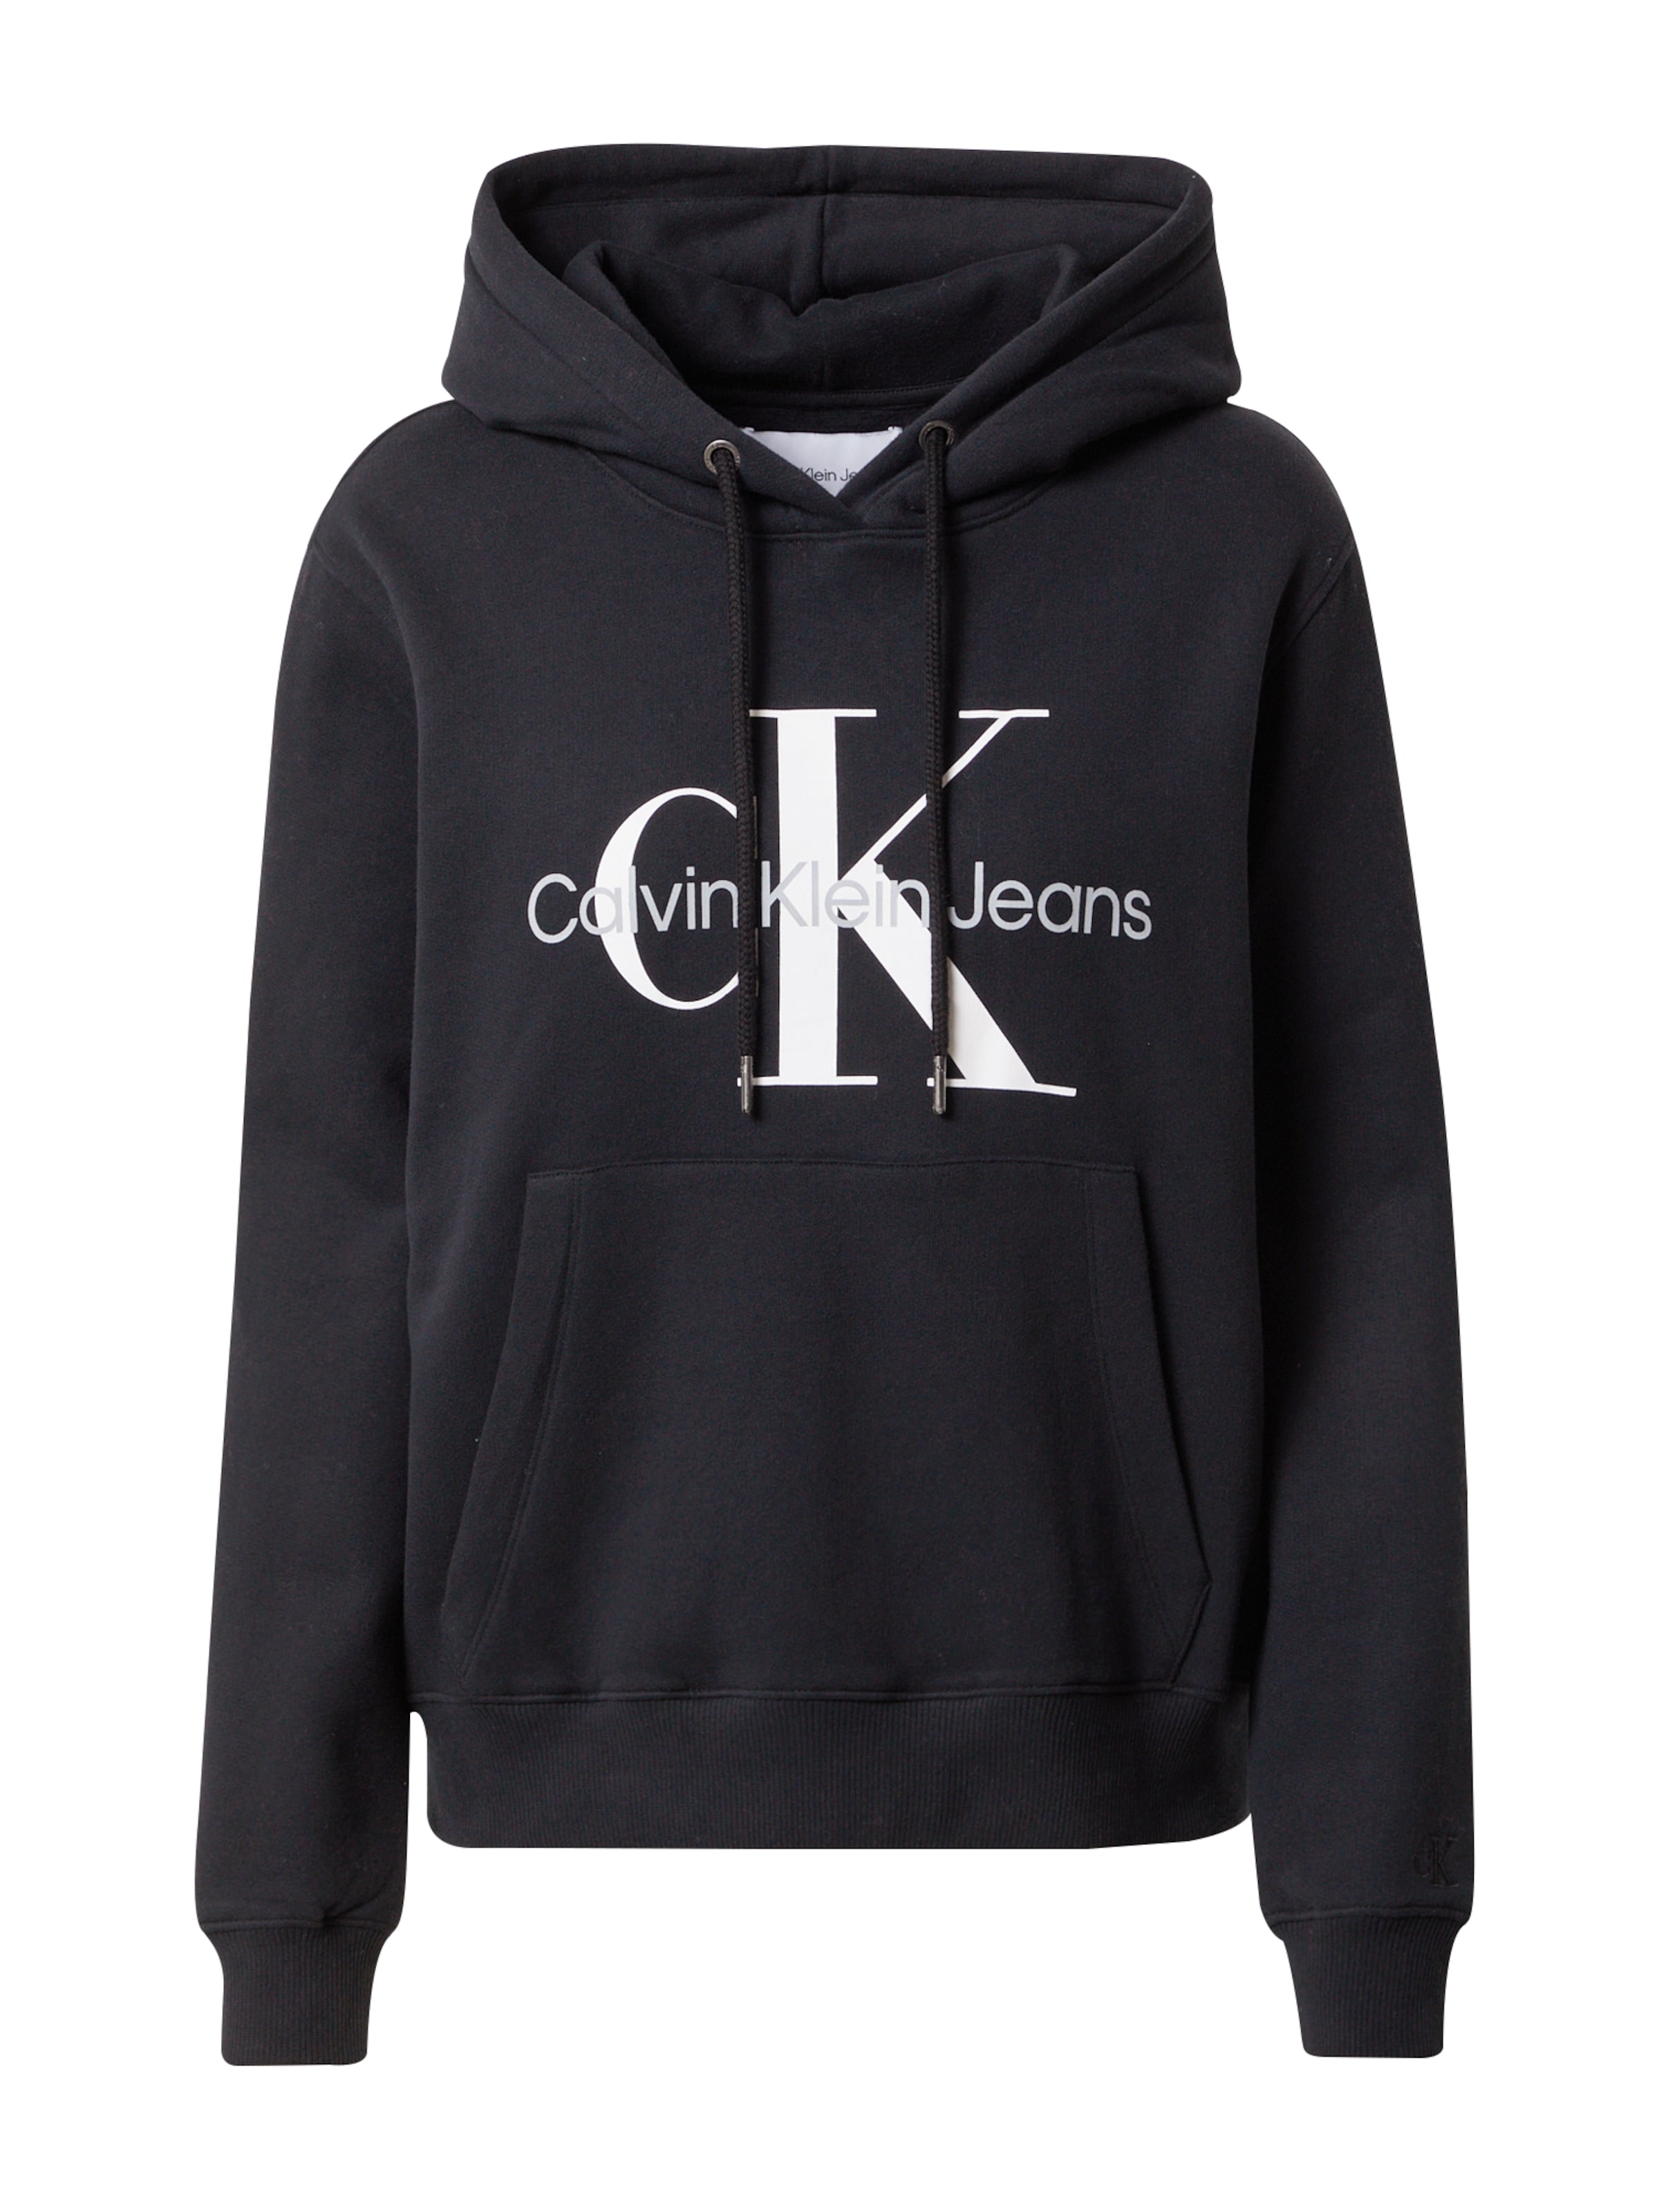 Marque  Calvin Klein JeansCalvin Klein Jeans Micro Branding CN Unisexe Sweater Femme 